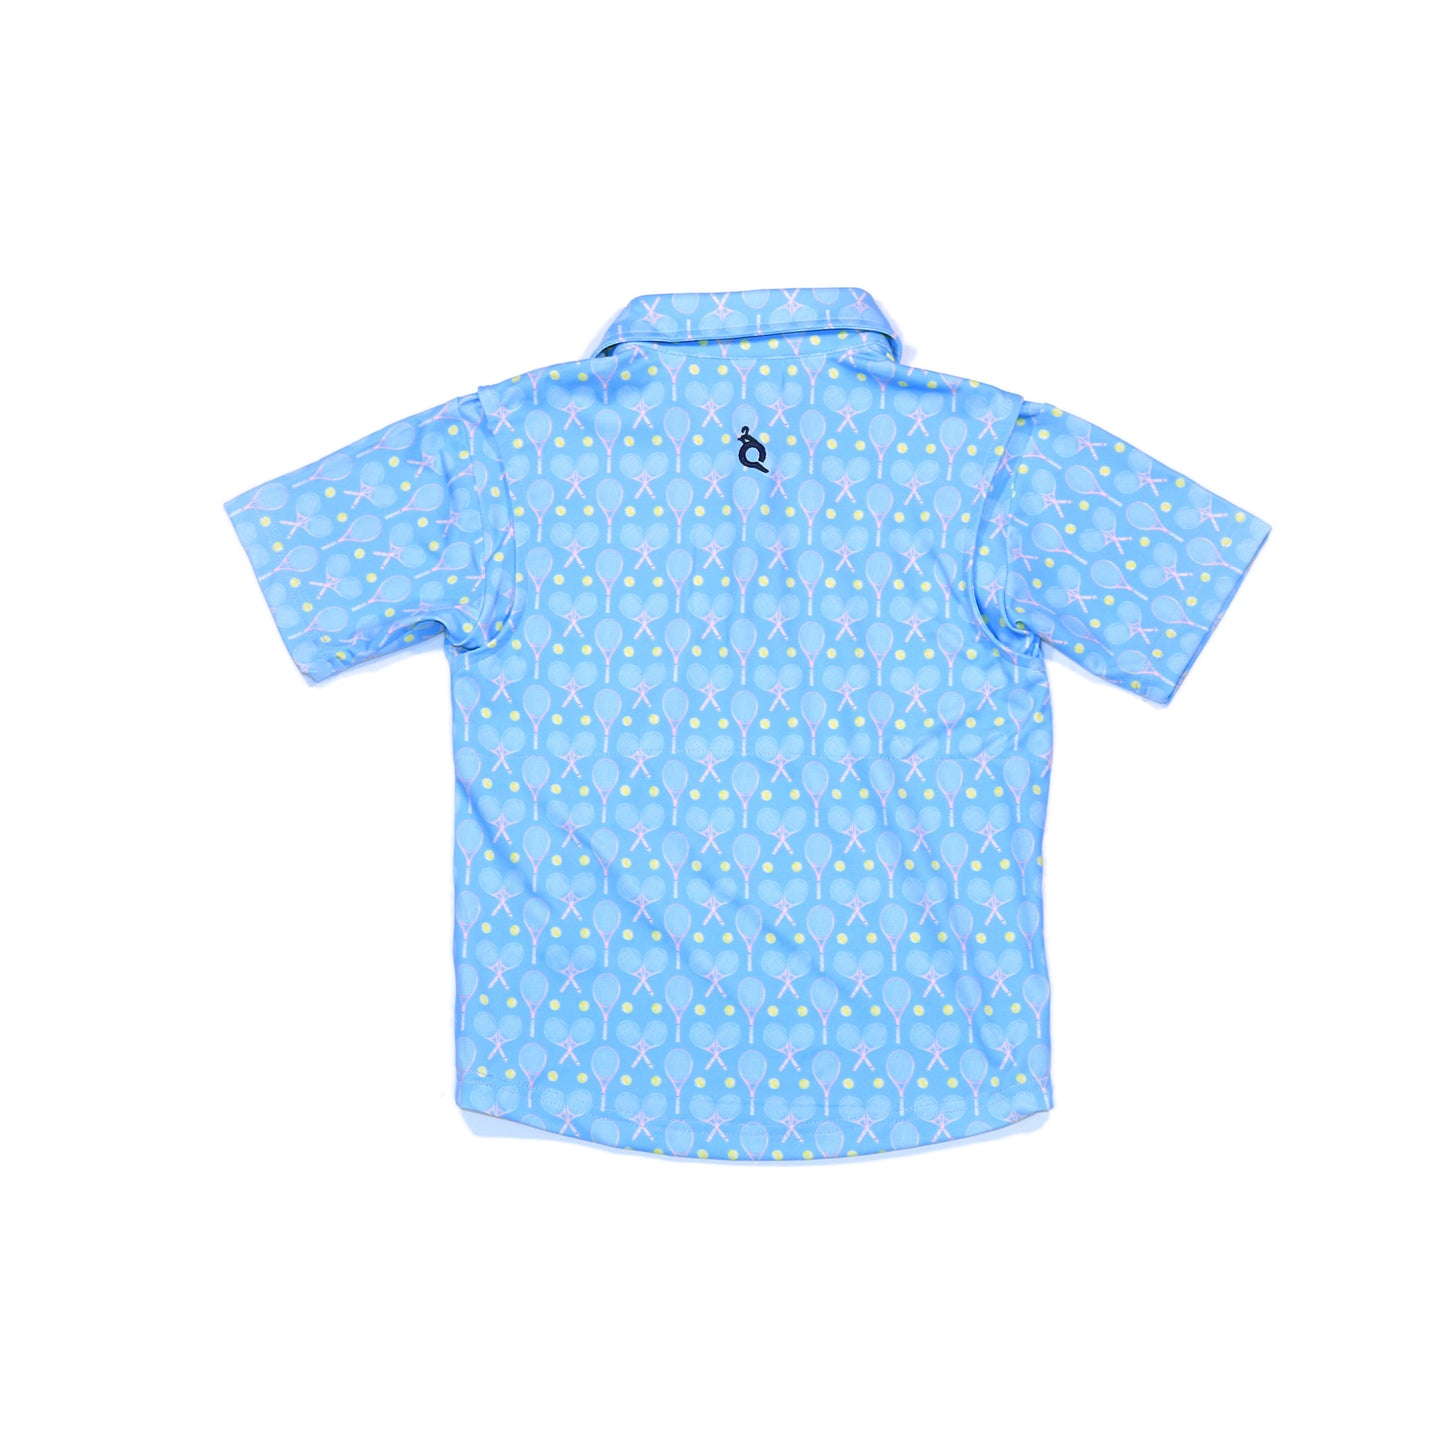 Blue Tennis Polo Short Sleeve Shirt